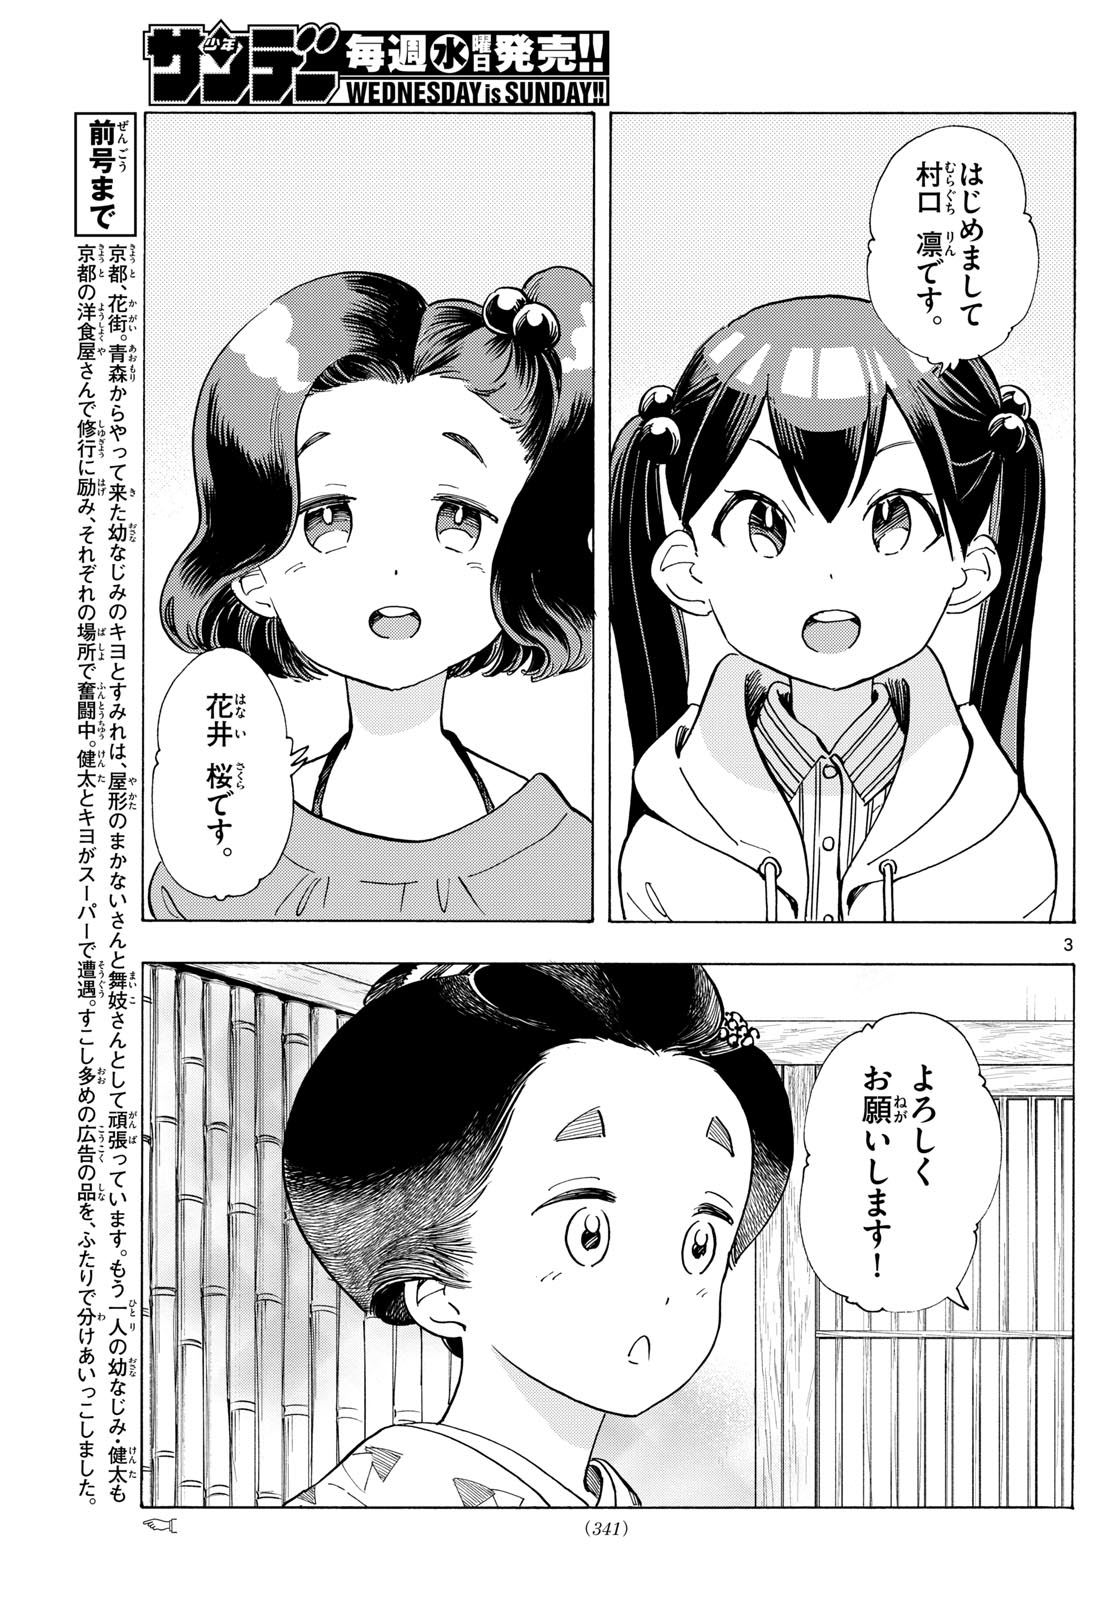 Maiko-san Chi no Makanai-san - Chapter 288 - Page 3